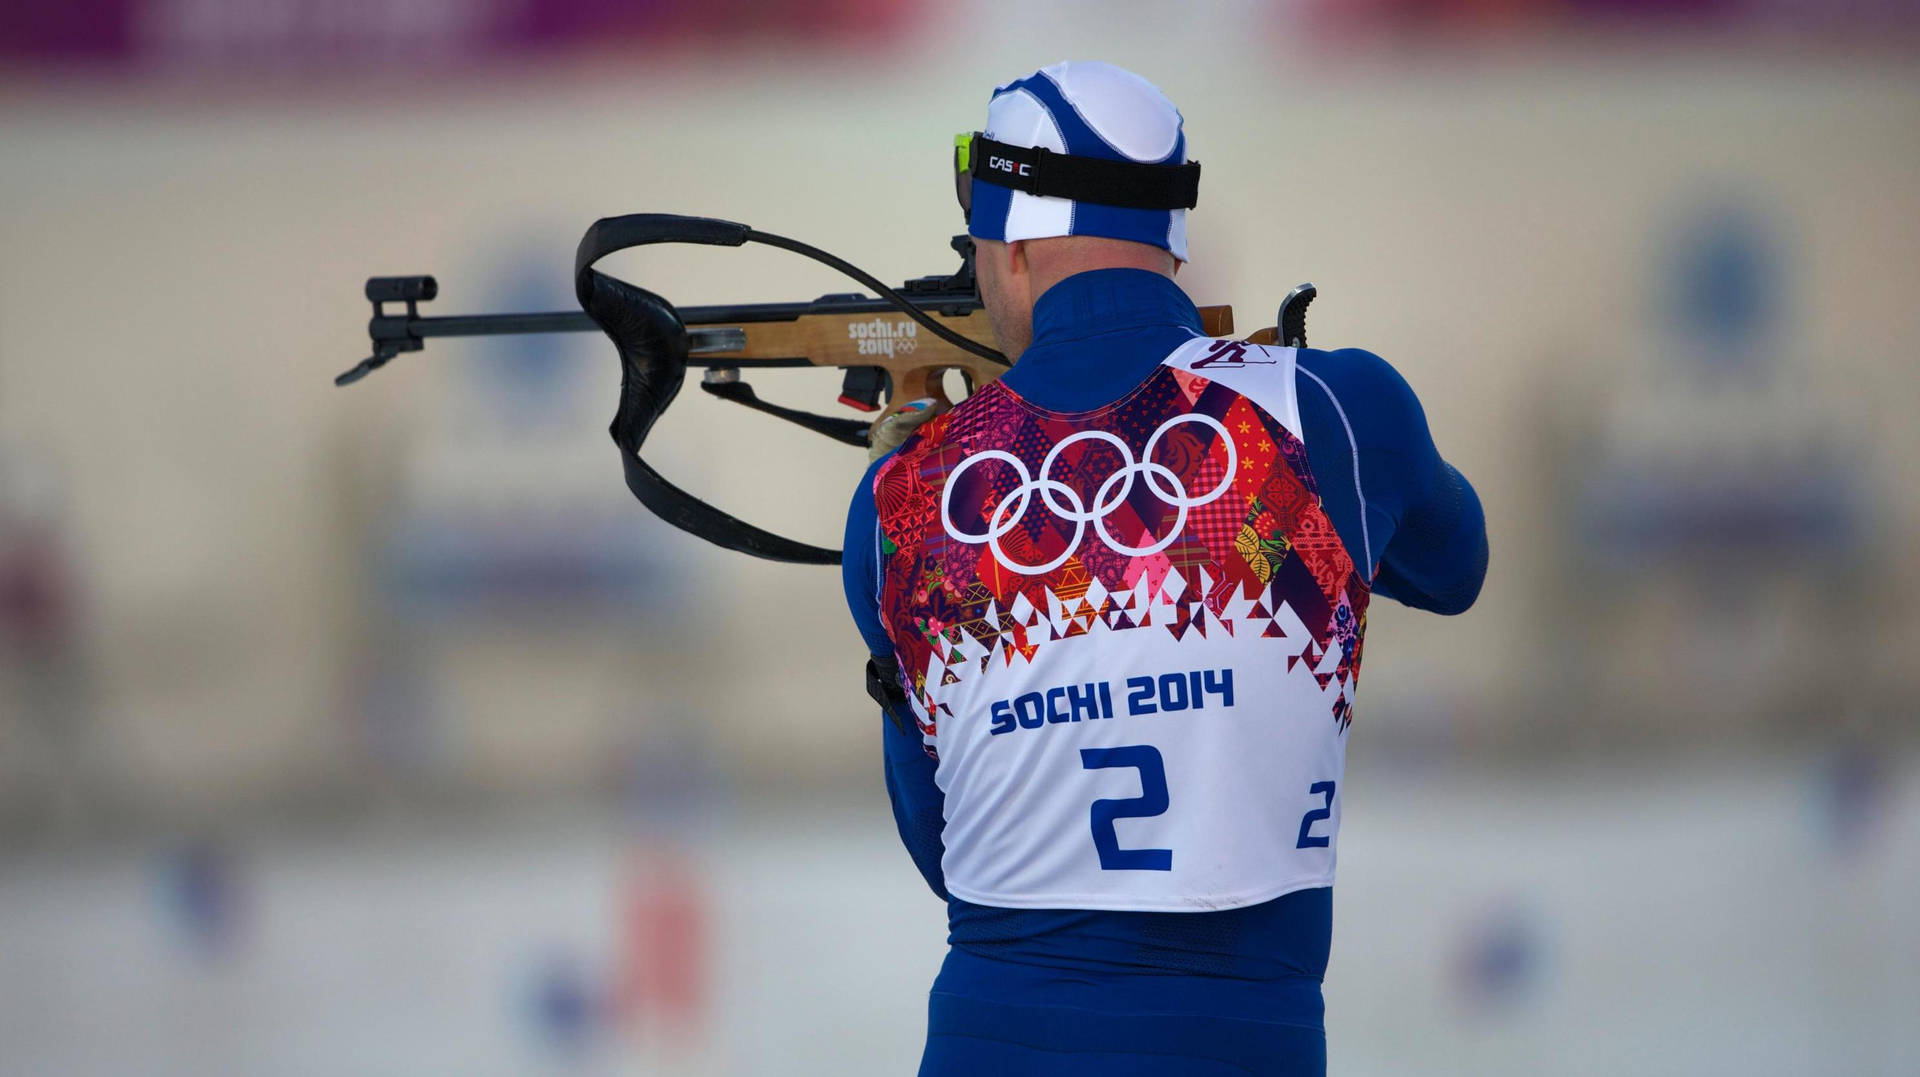 Olympic Winter Games Sochi 2014 Biathlon Wallpaper